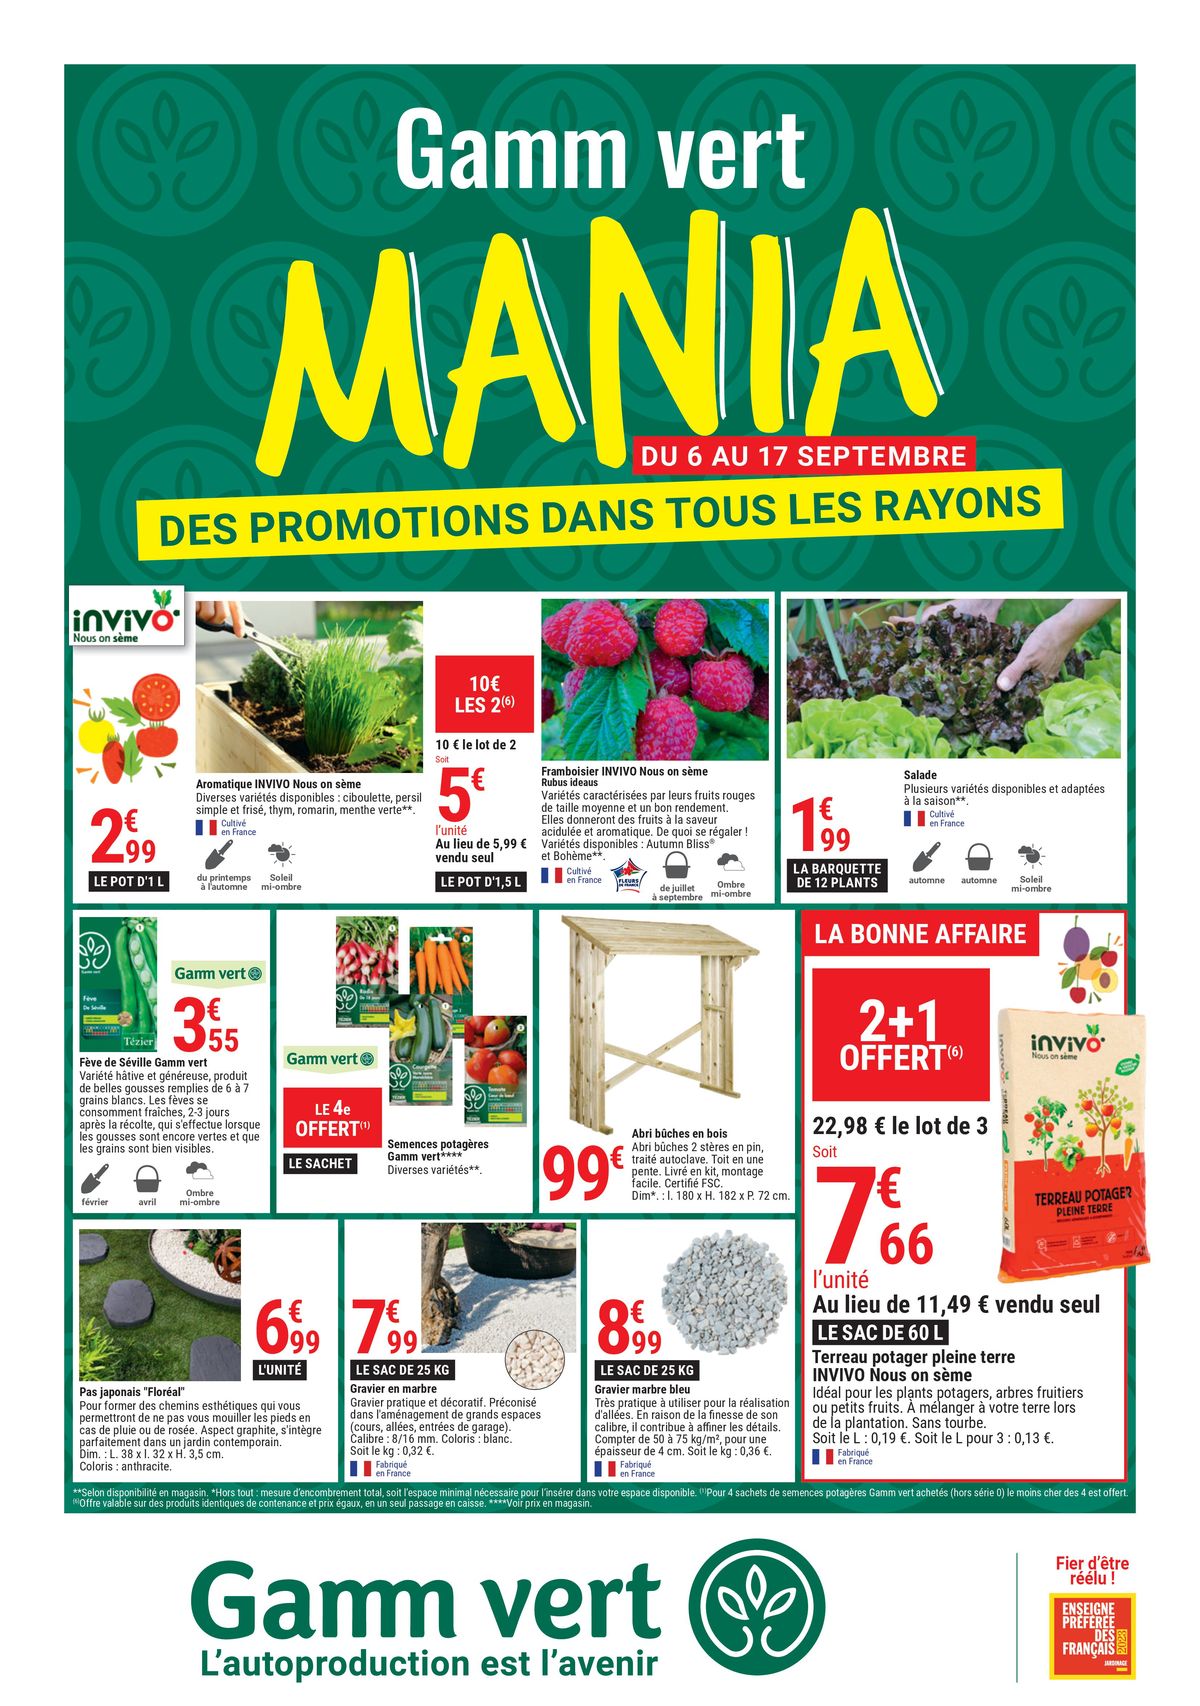 Catalogue Gamm Vert Mania, page 00001